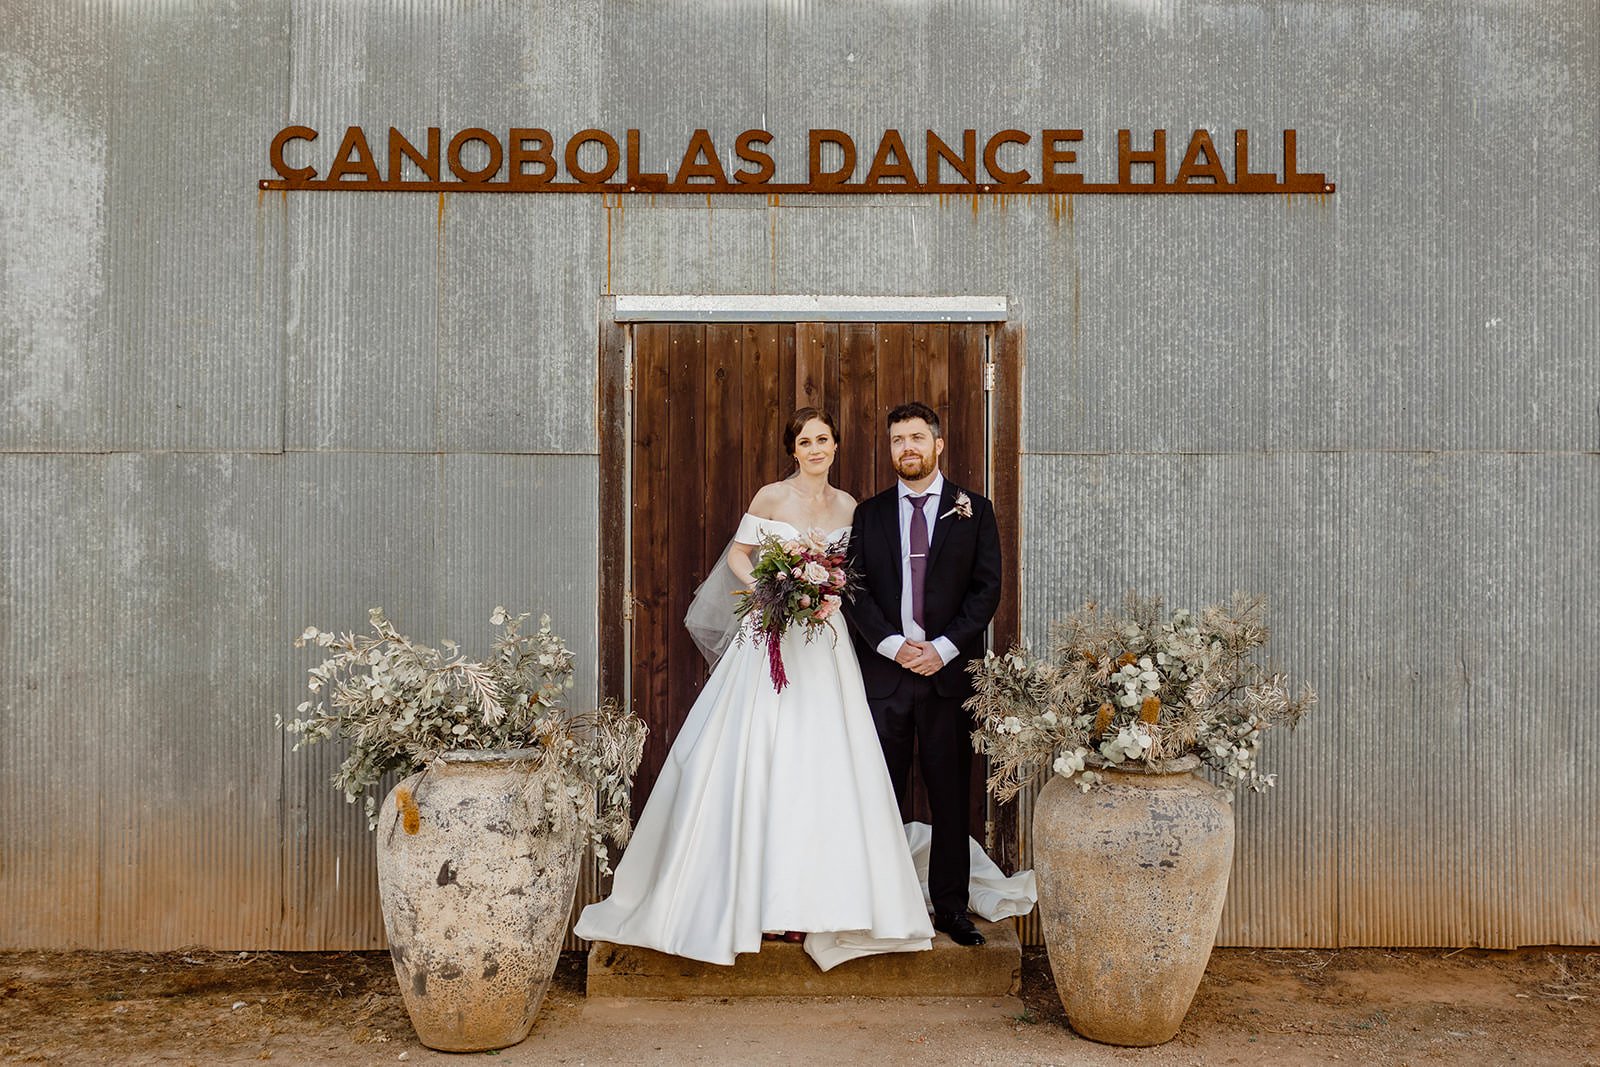 Kirsten-Cunningham-Photography-Wedding-Canobolas-Dance-Hall-43.JPG